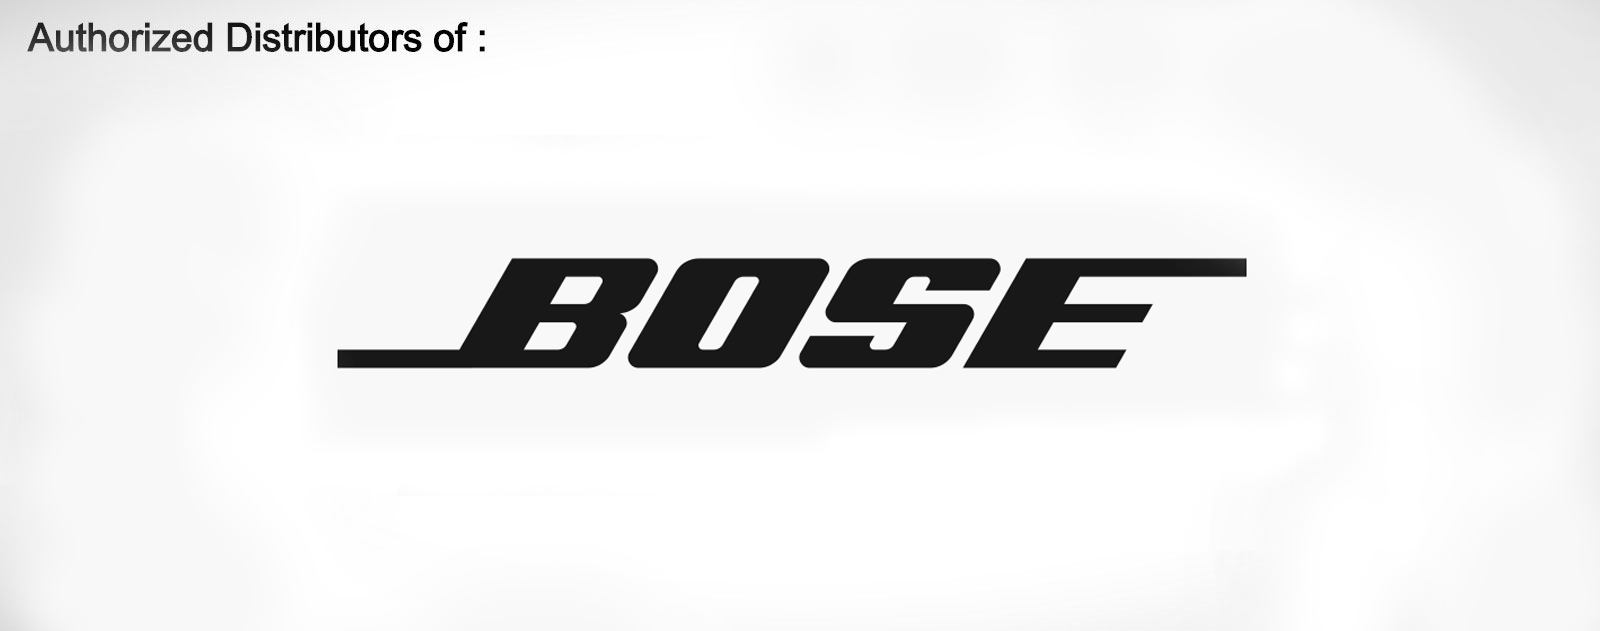 Authorized Distributors of BOSE